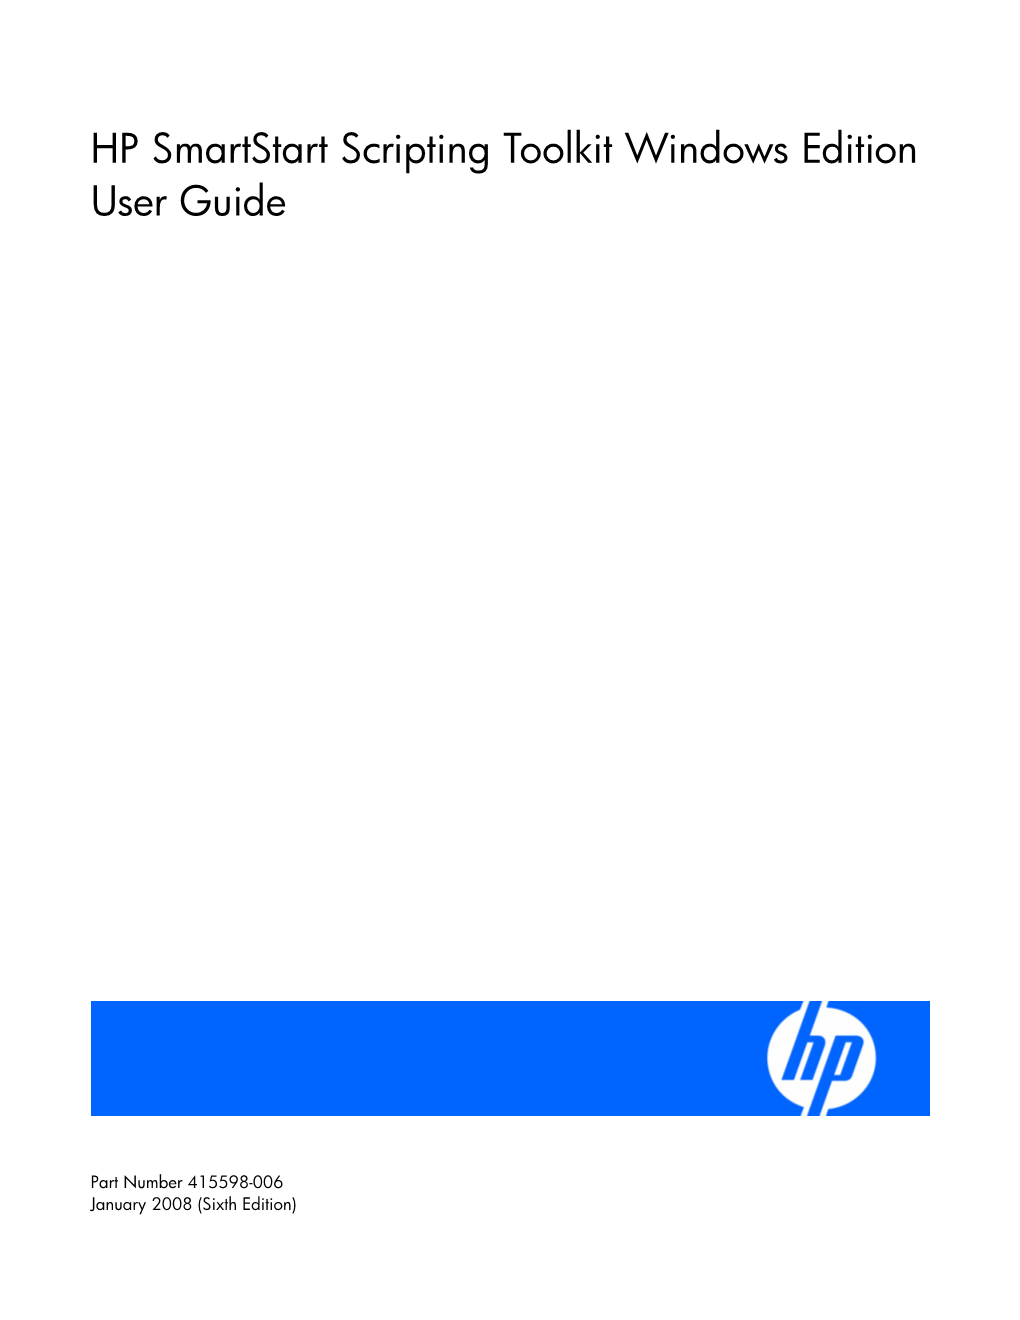 HP Smartstart Scripting Toolkit Windows Edition User Guide